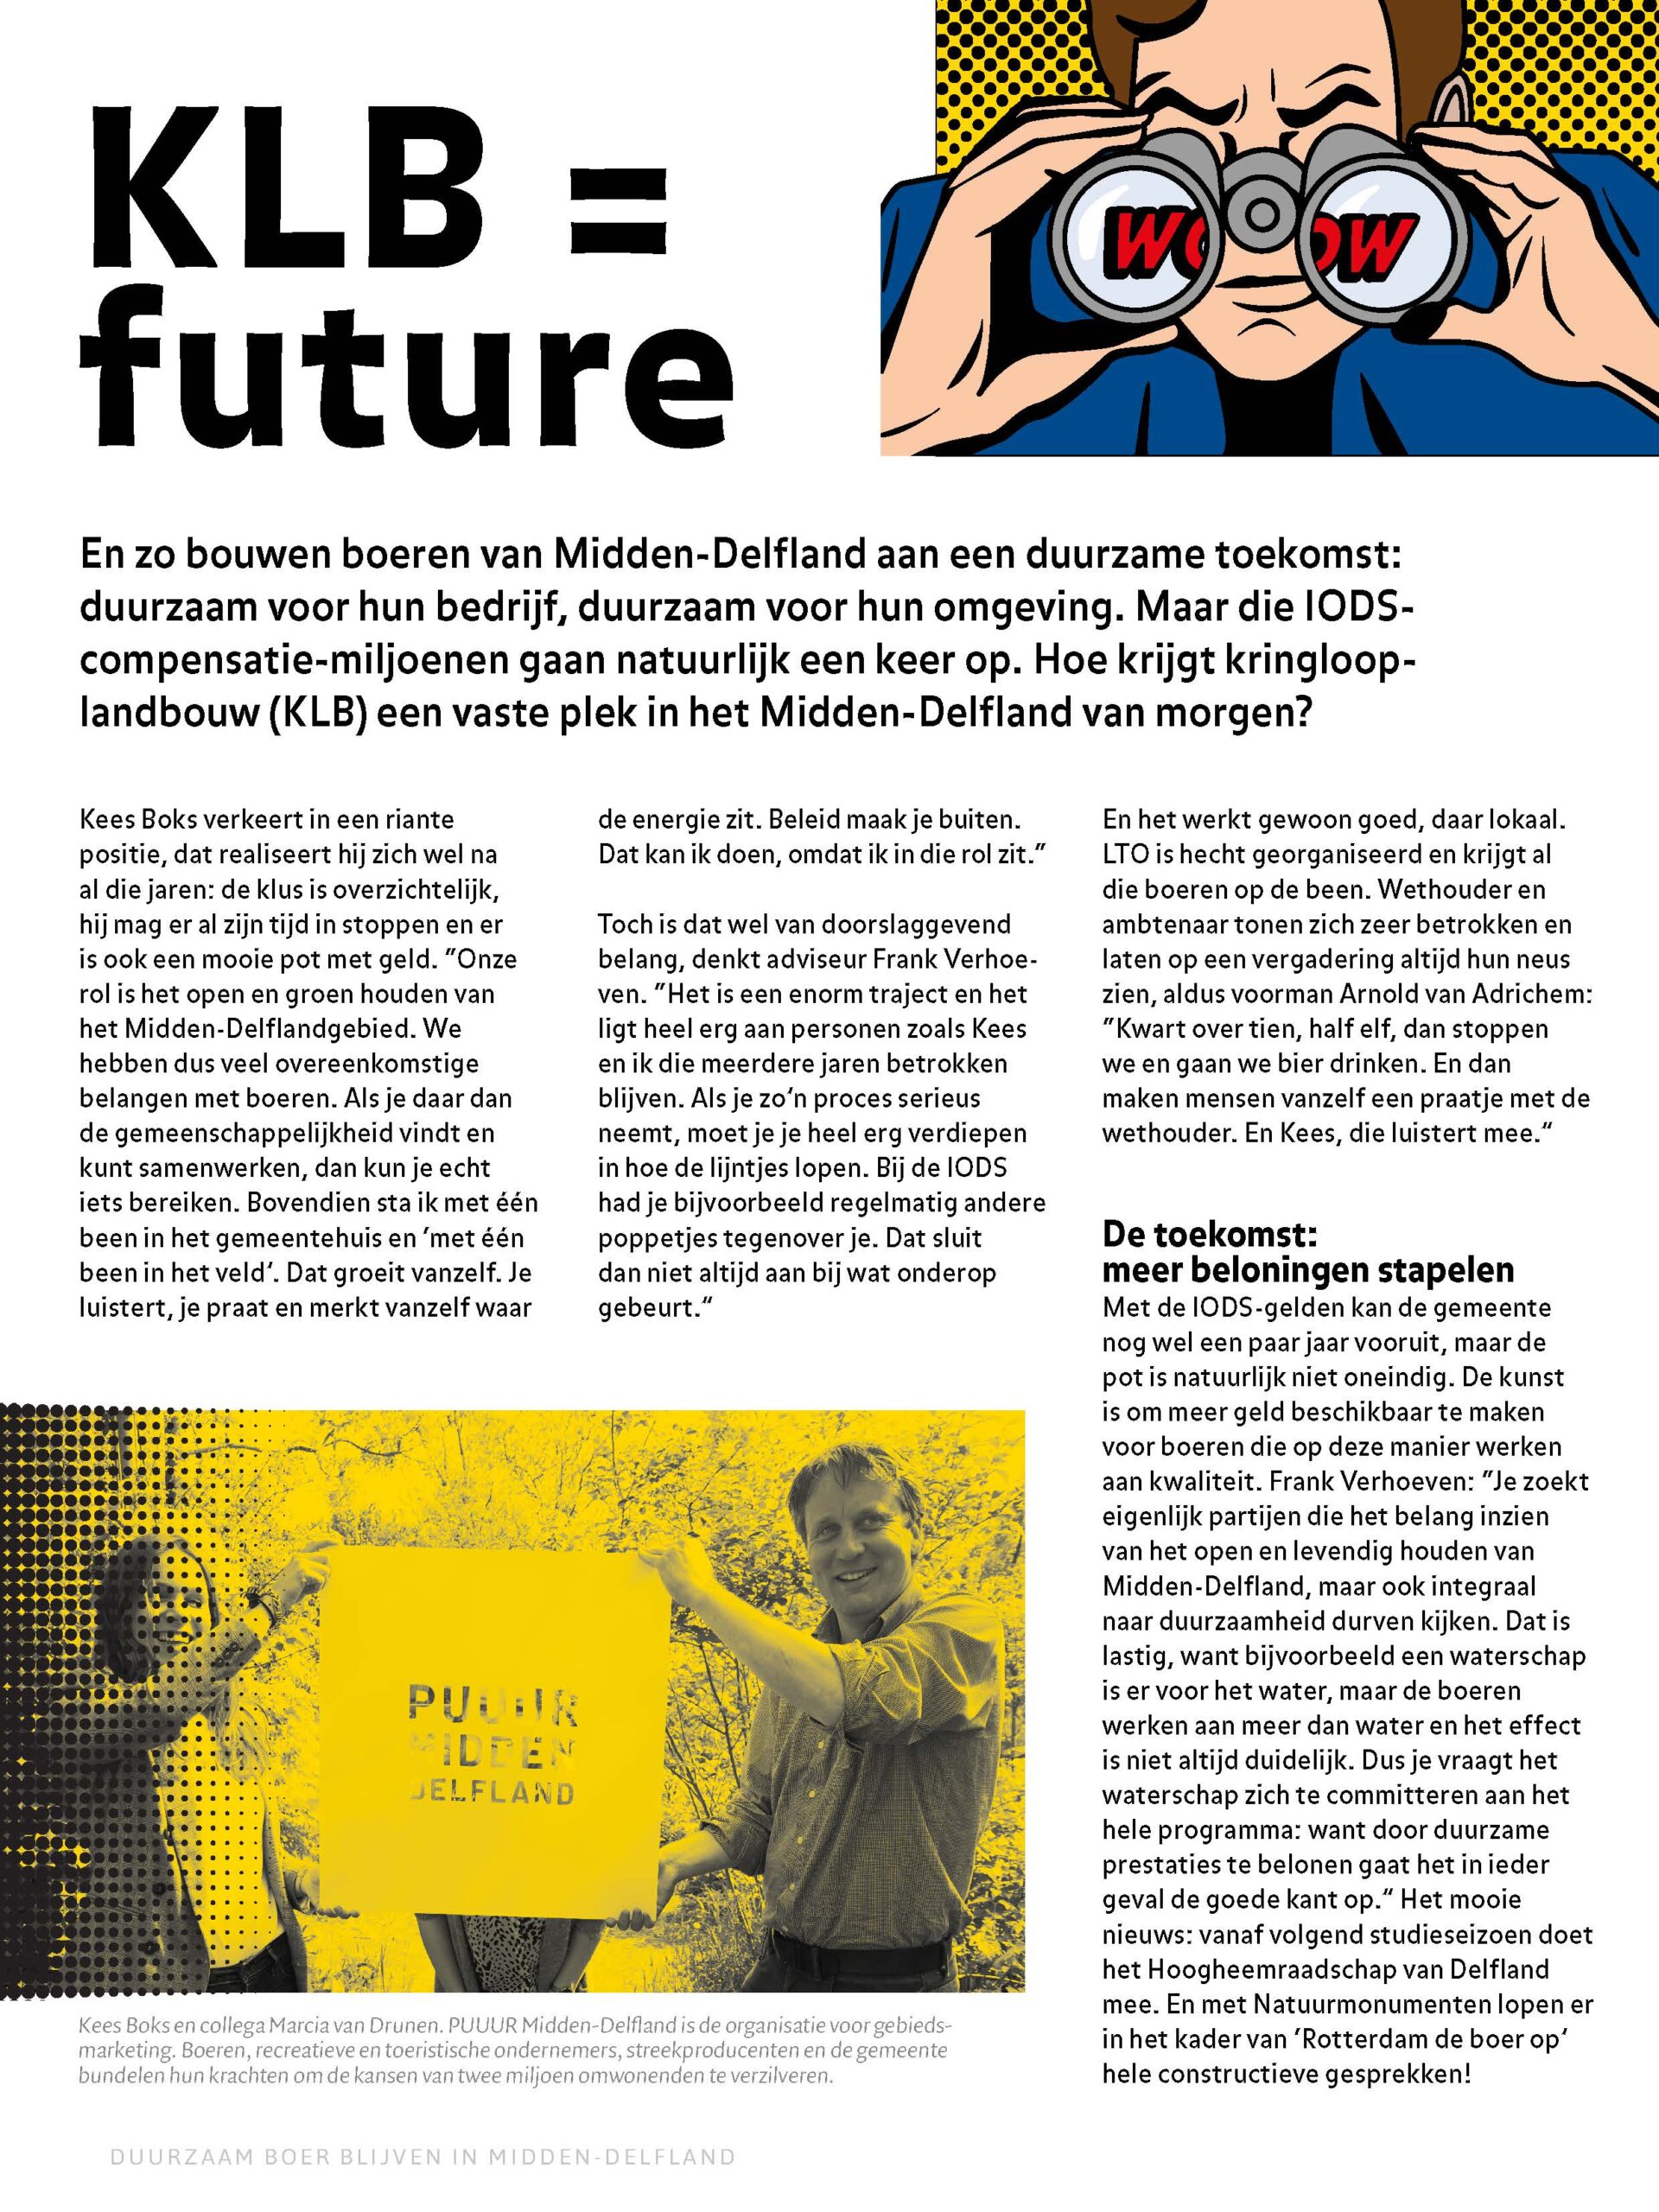 DBB magazine 26 kringlooplandbouw is toekomst